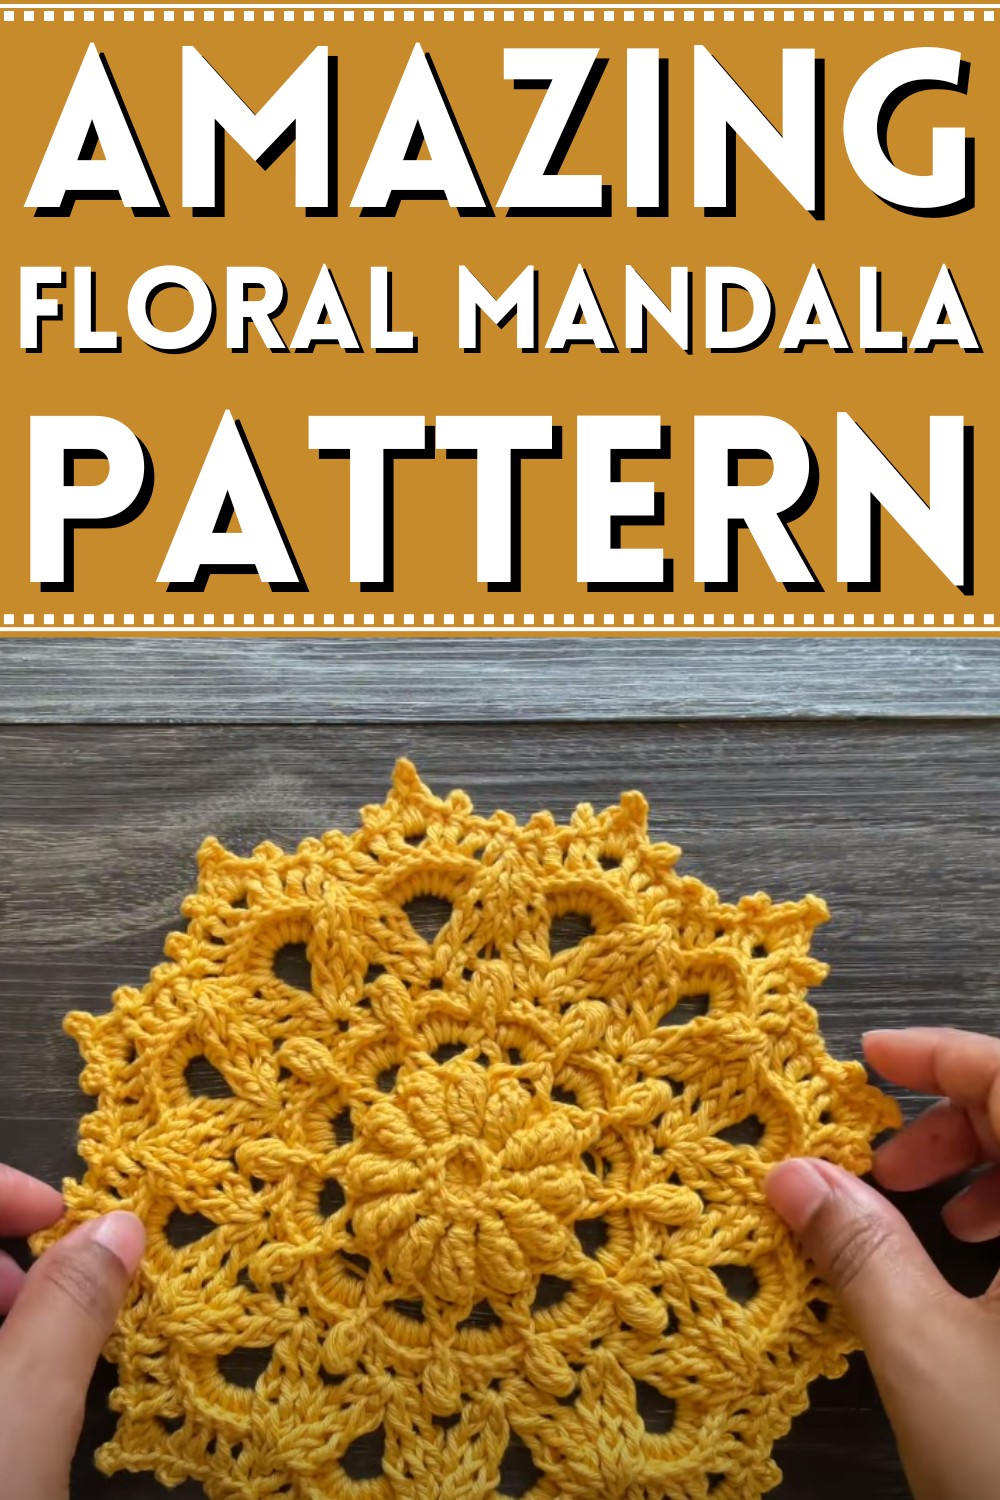 Crochet An Amazing Floral Mandala